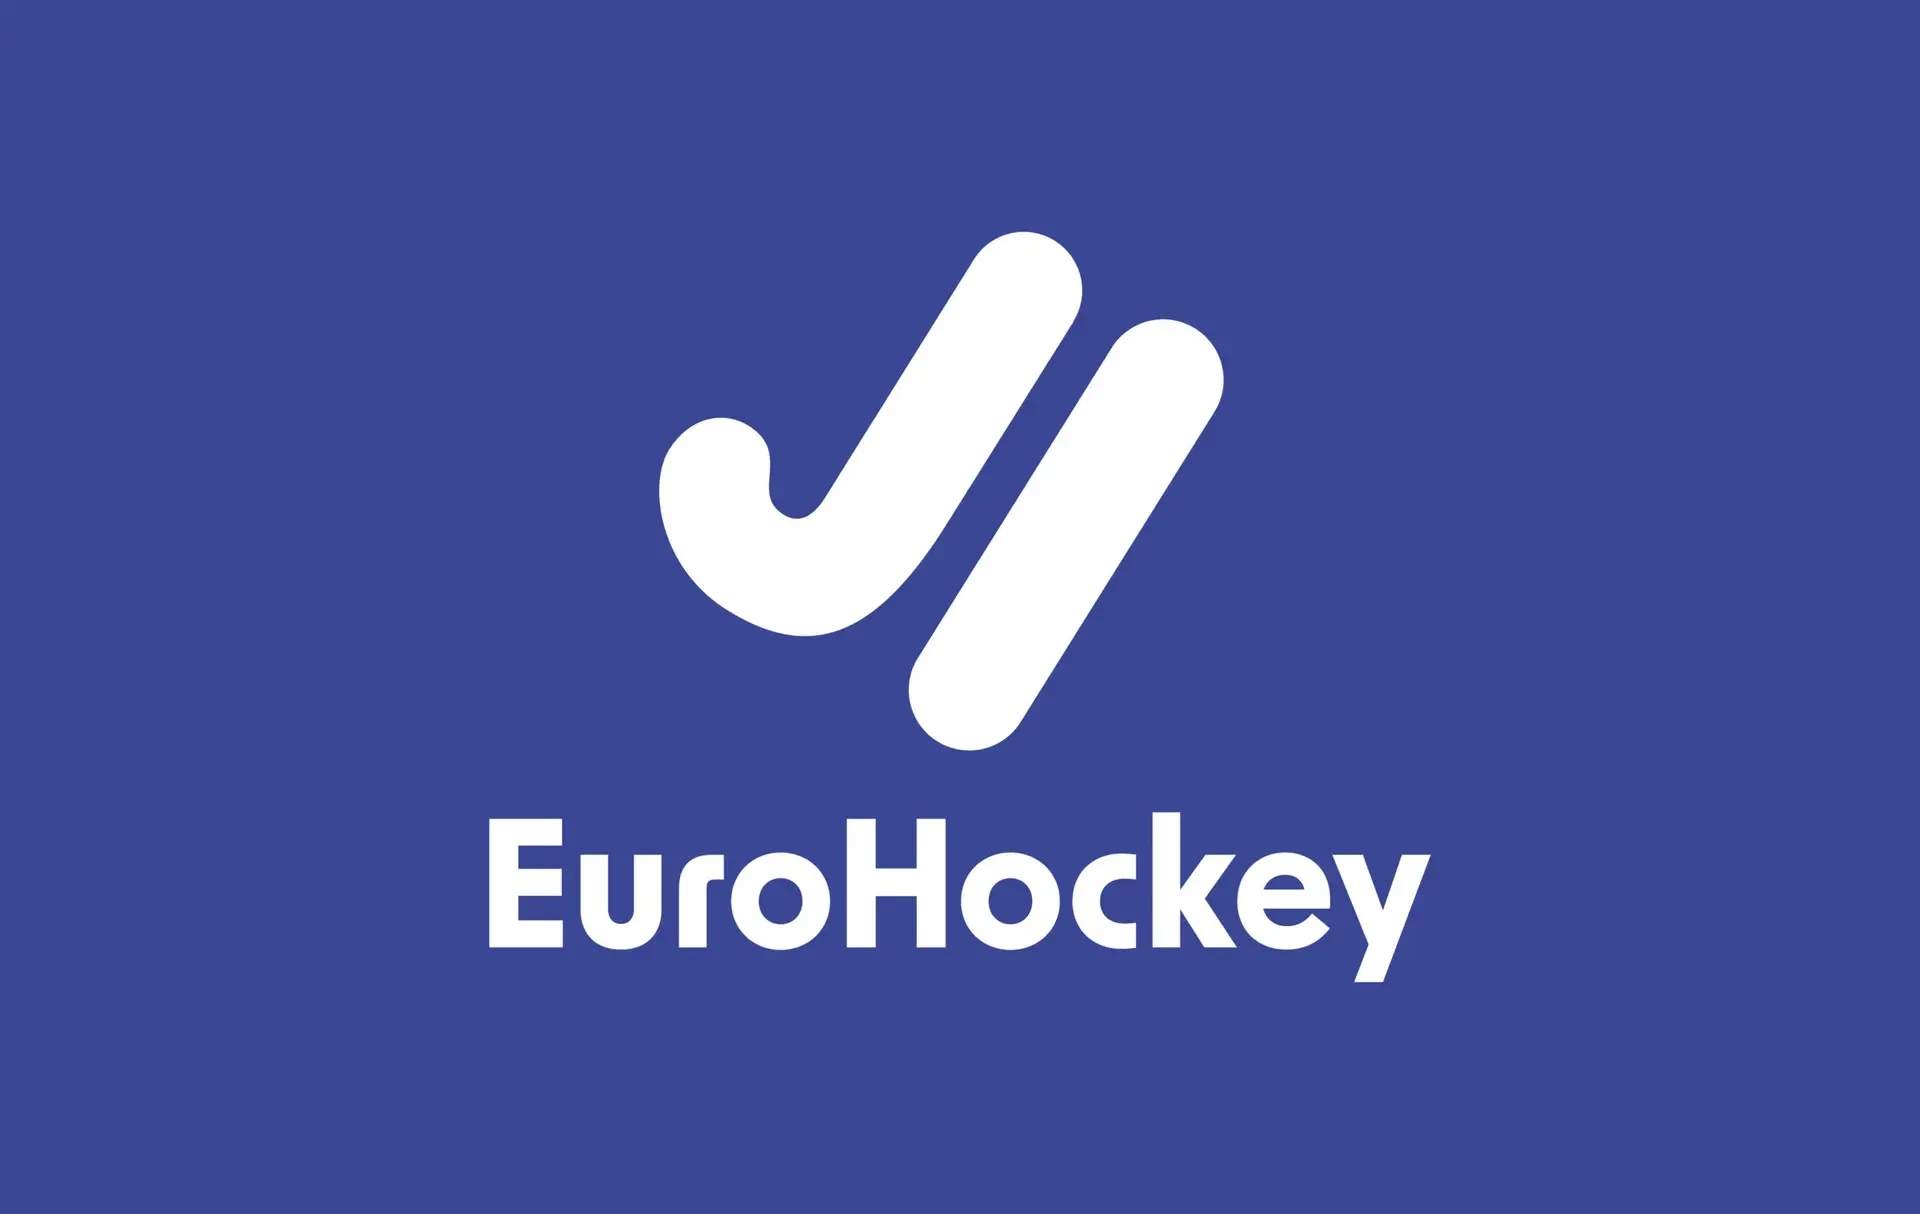 Hofmann succeeds long-serving Fleuren as President of rebranded EuroHockey